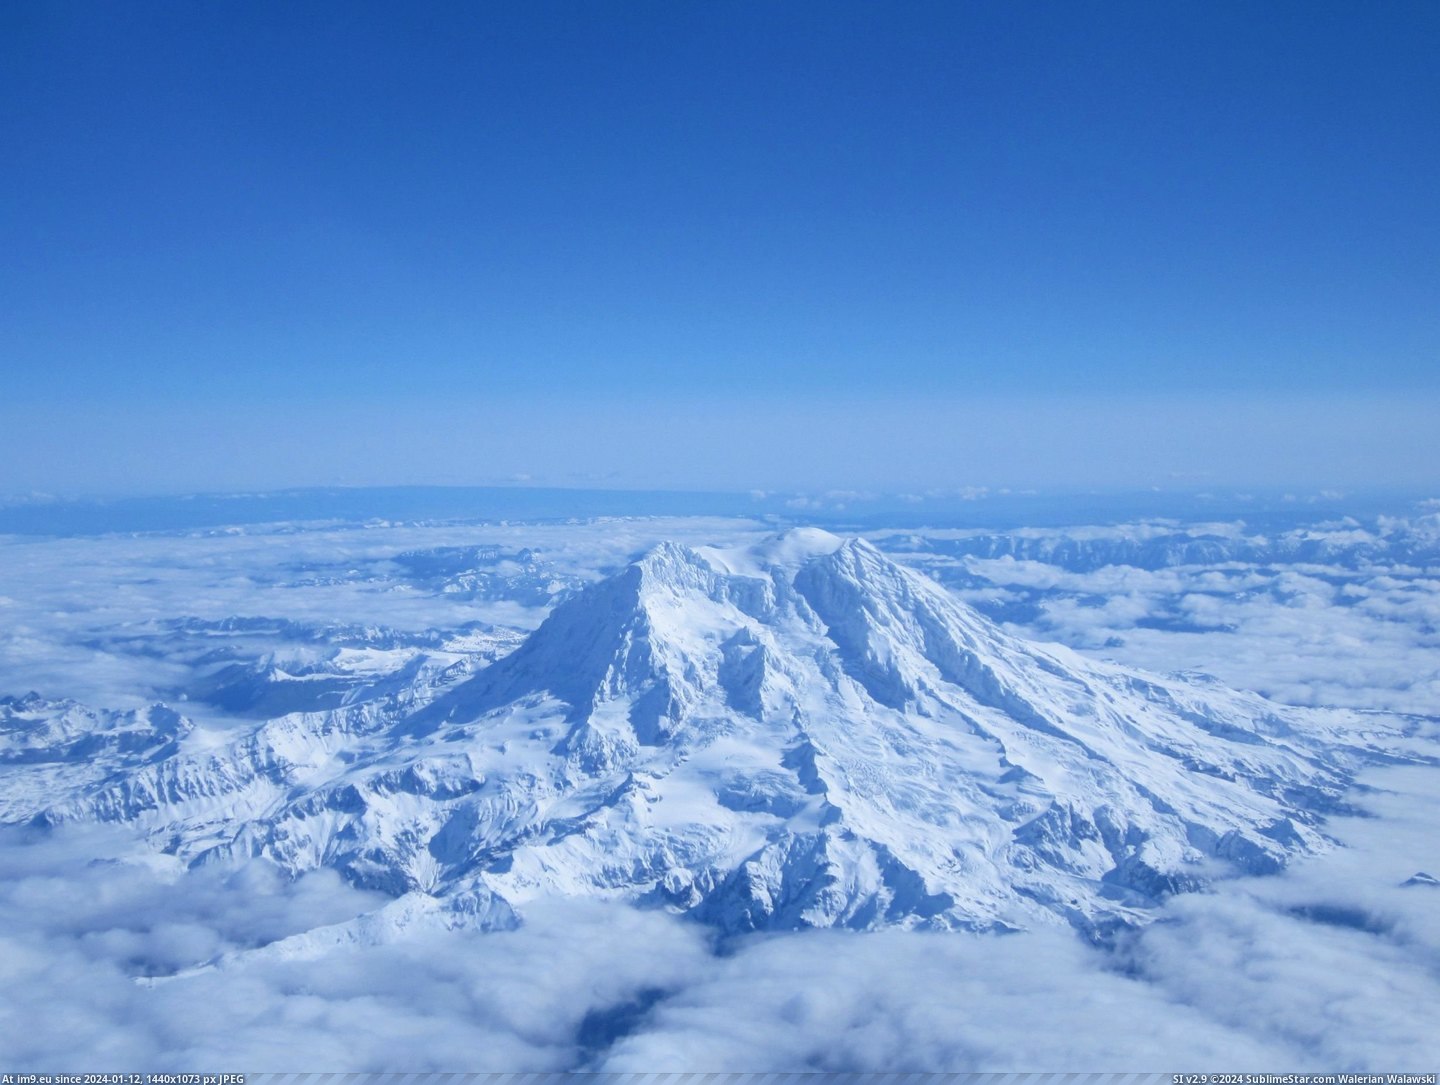 #Out #Rainier #Airplane #Window [Pics] Mt. Rainier out of the airplane window Pic. (Image of album My r/PICS favs))